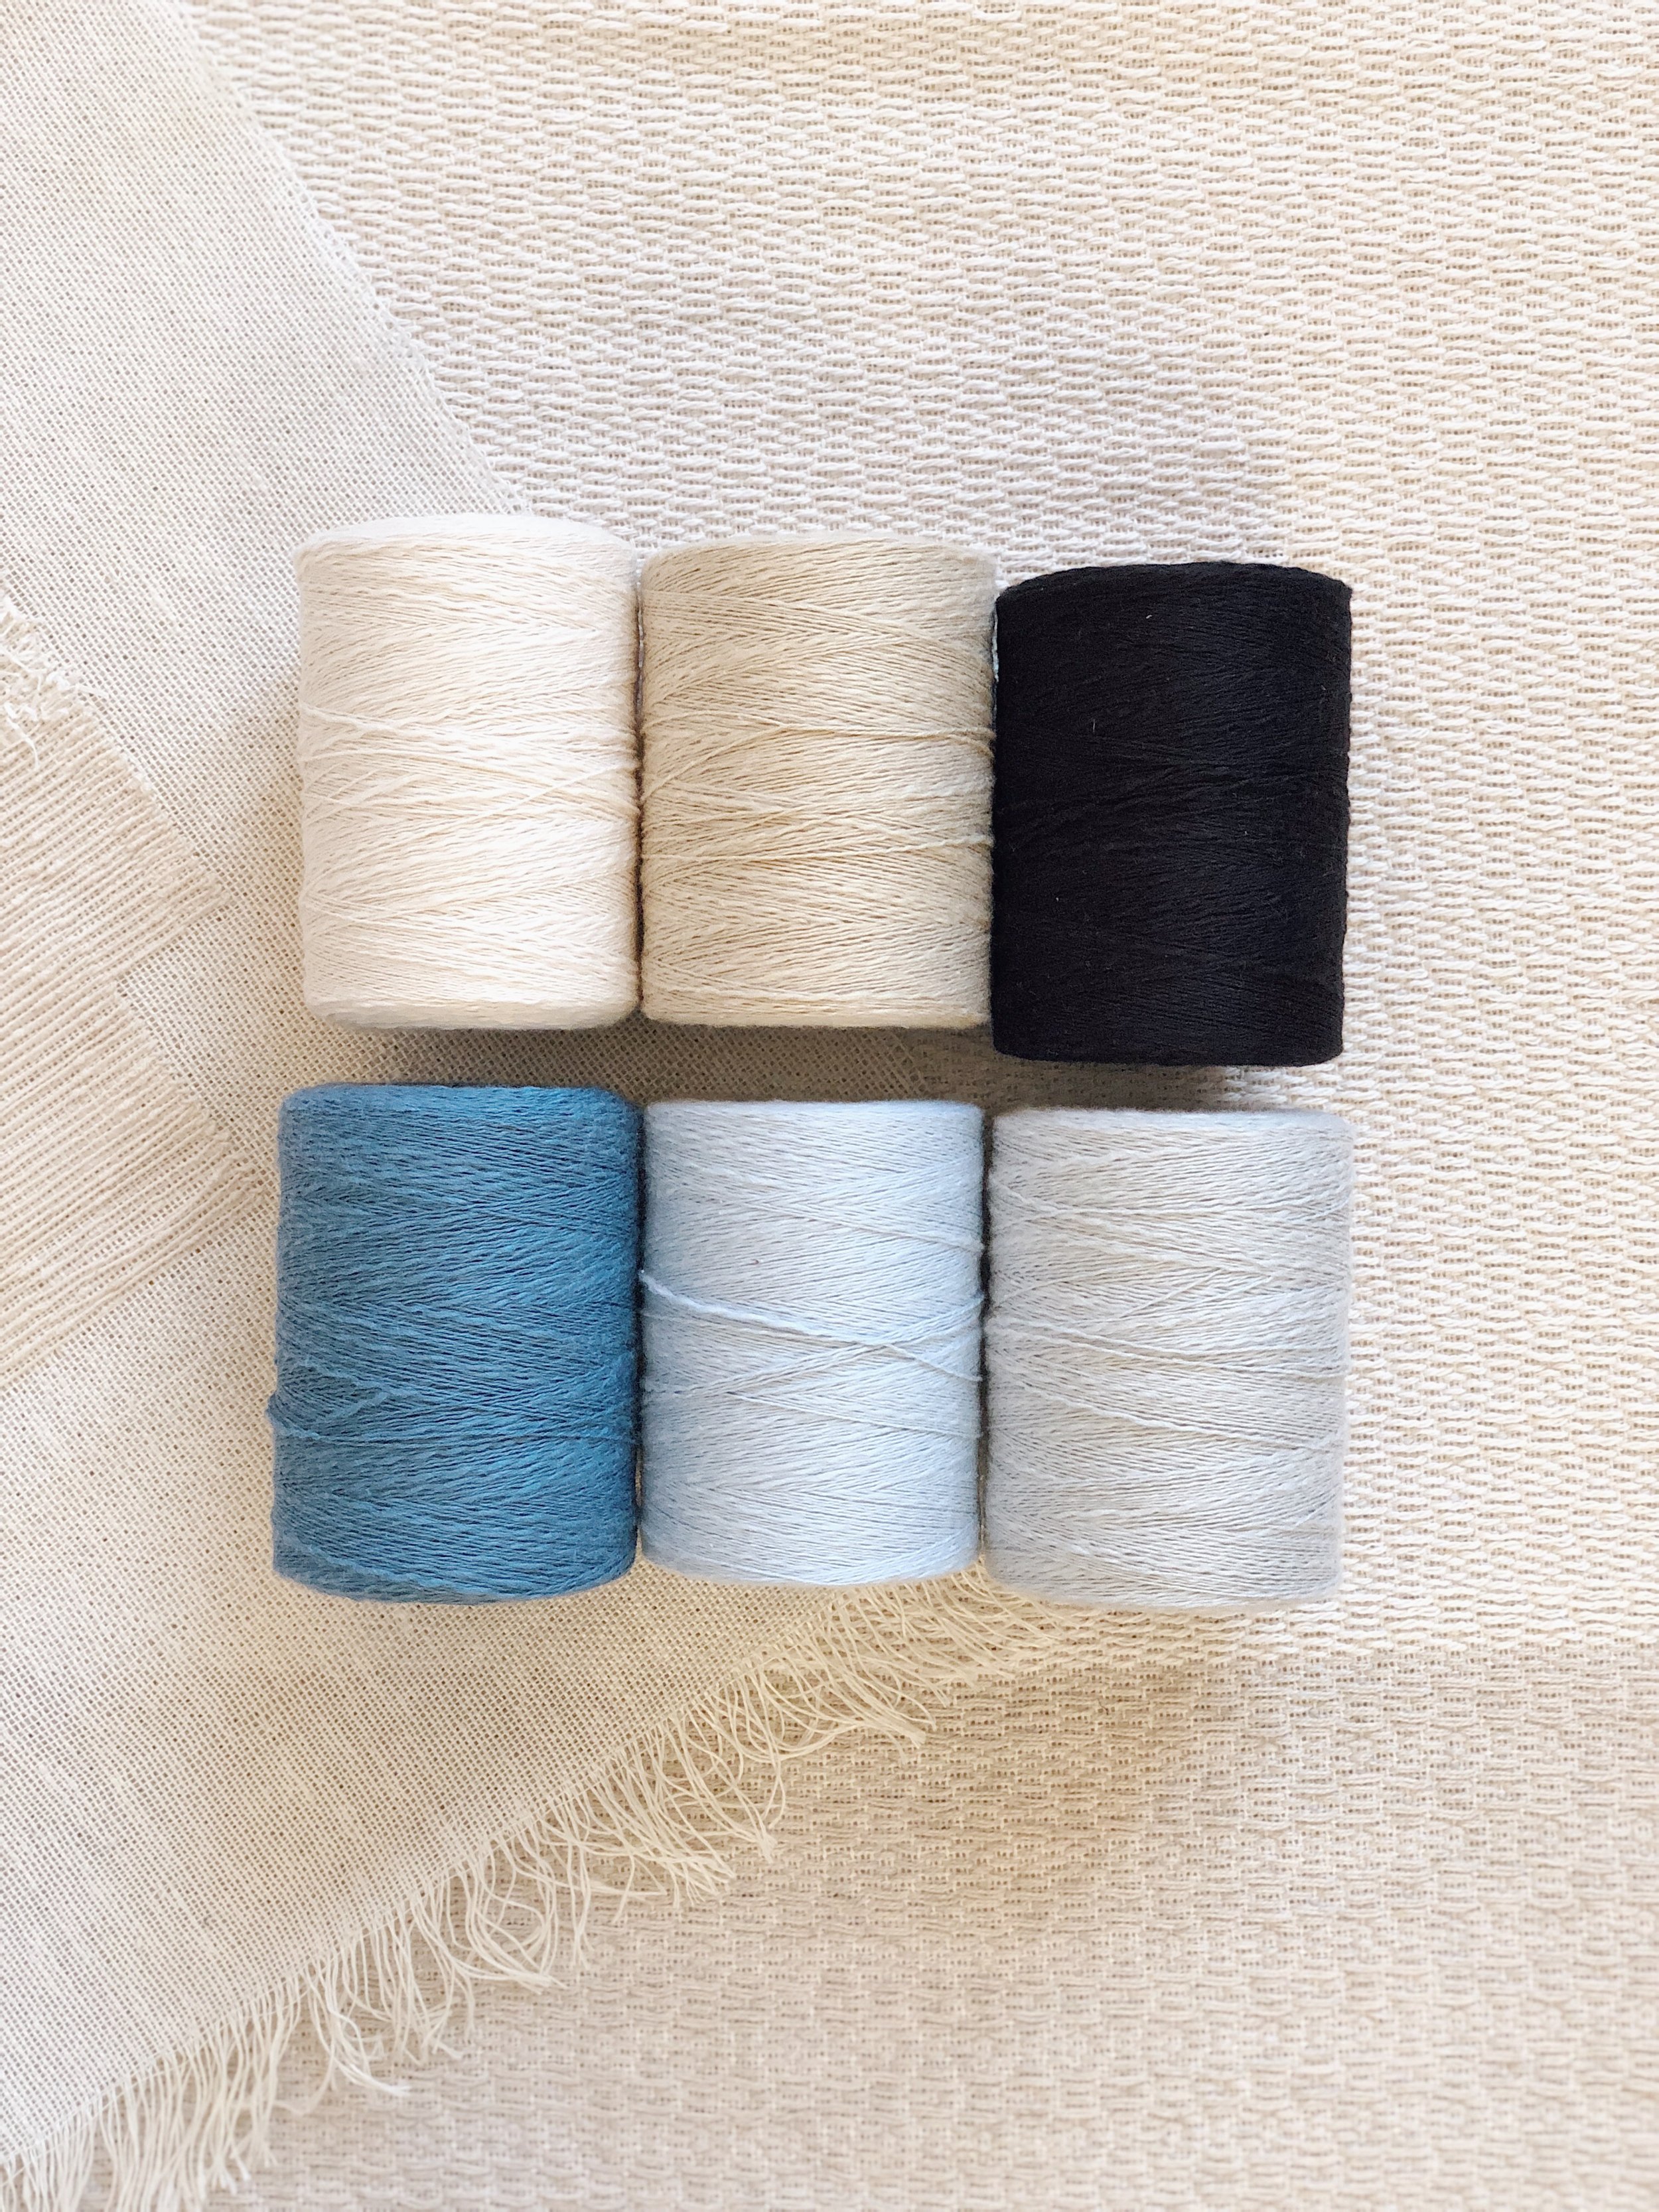 Yarn for Weaving - Cotton